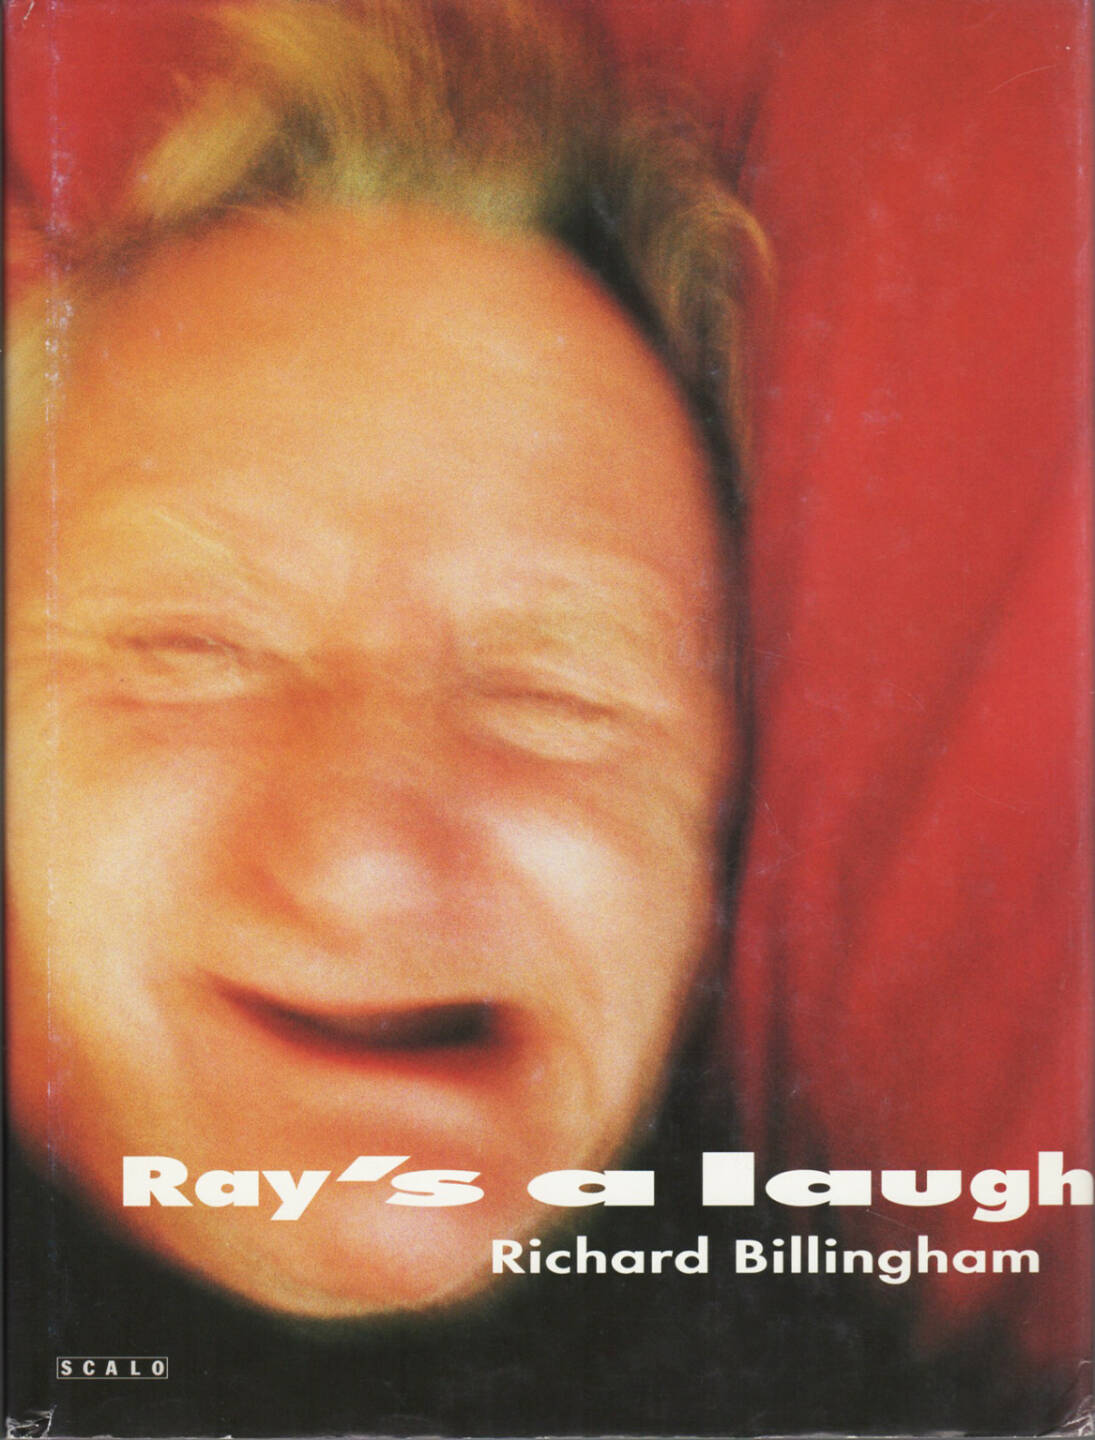 Richard Billingham - Ray's a laugh, Scalo 1996, Cover - http://josefchladek.com/book/richard_billingham_-_rays_a_laugh